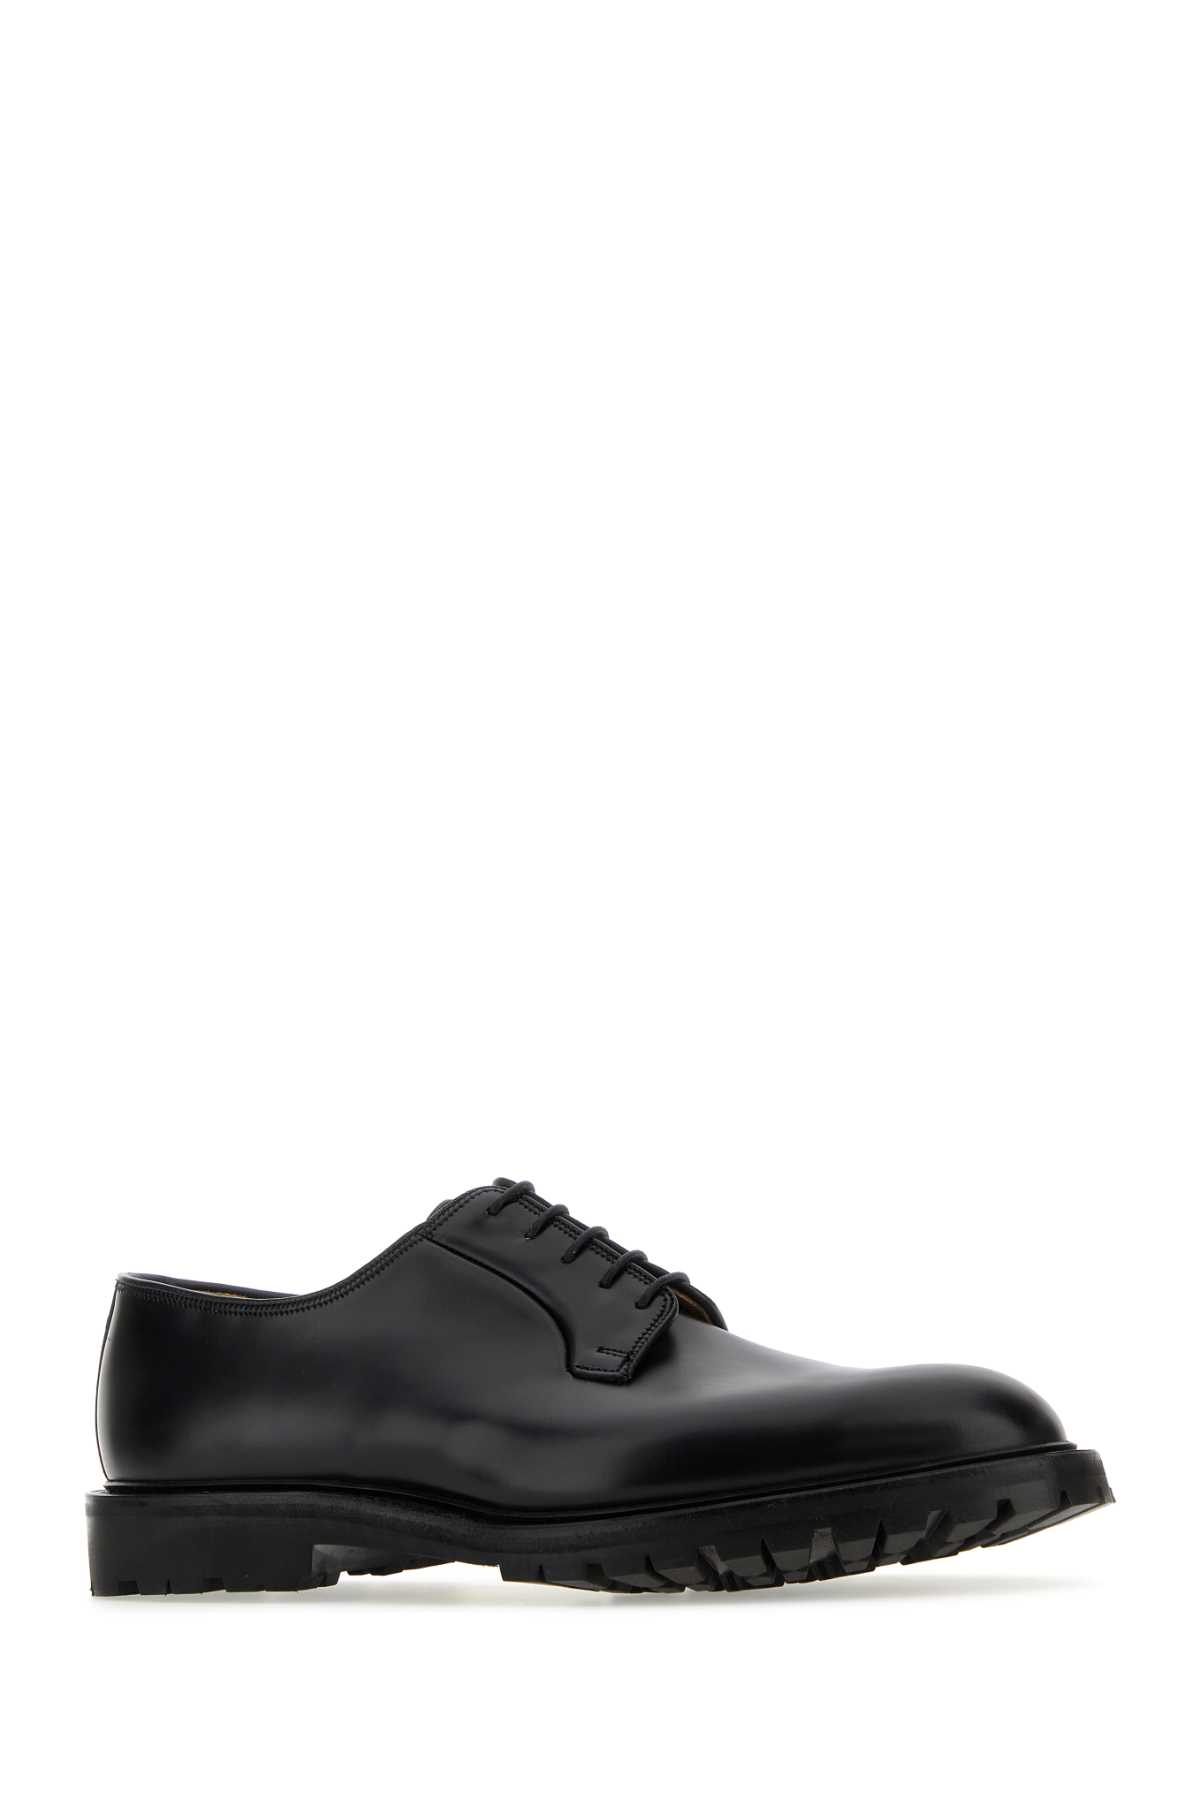 Crockett &amp; Jones Black Leather Lanark 3 Lace-up Shoes